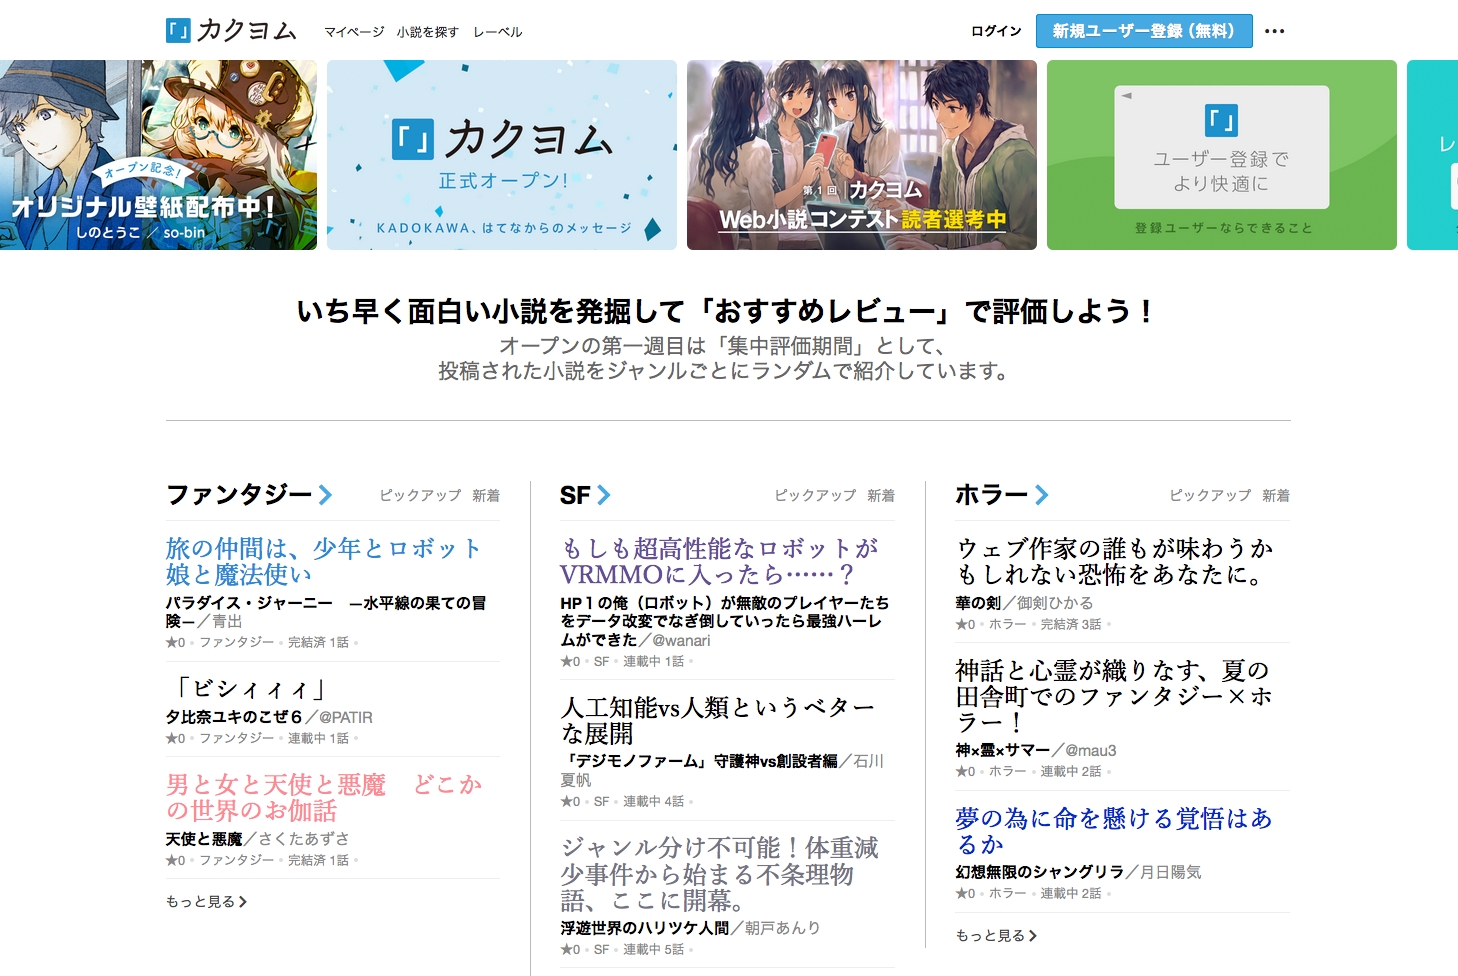 Kadokawa はてな 新 Web投稿サイト カクヨム 正式オープン 第1回カクヨムweb小説コンテストの読者選考も開始 株式会社kadokawaのプレスリリース